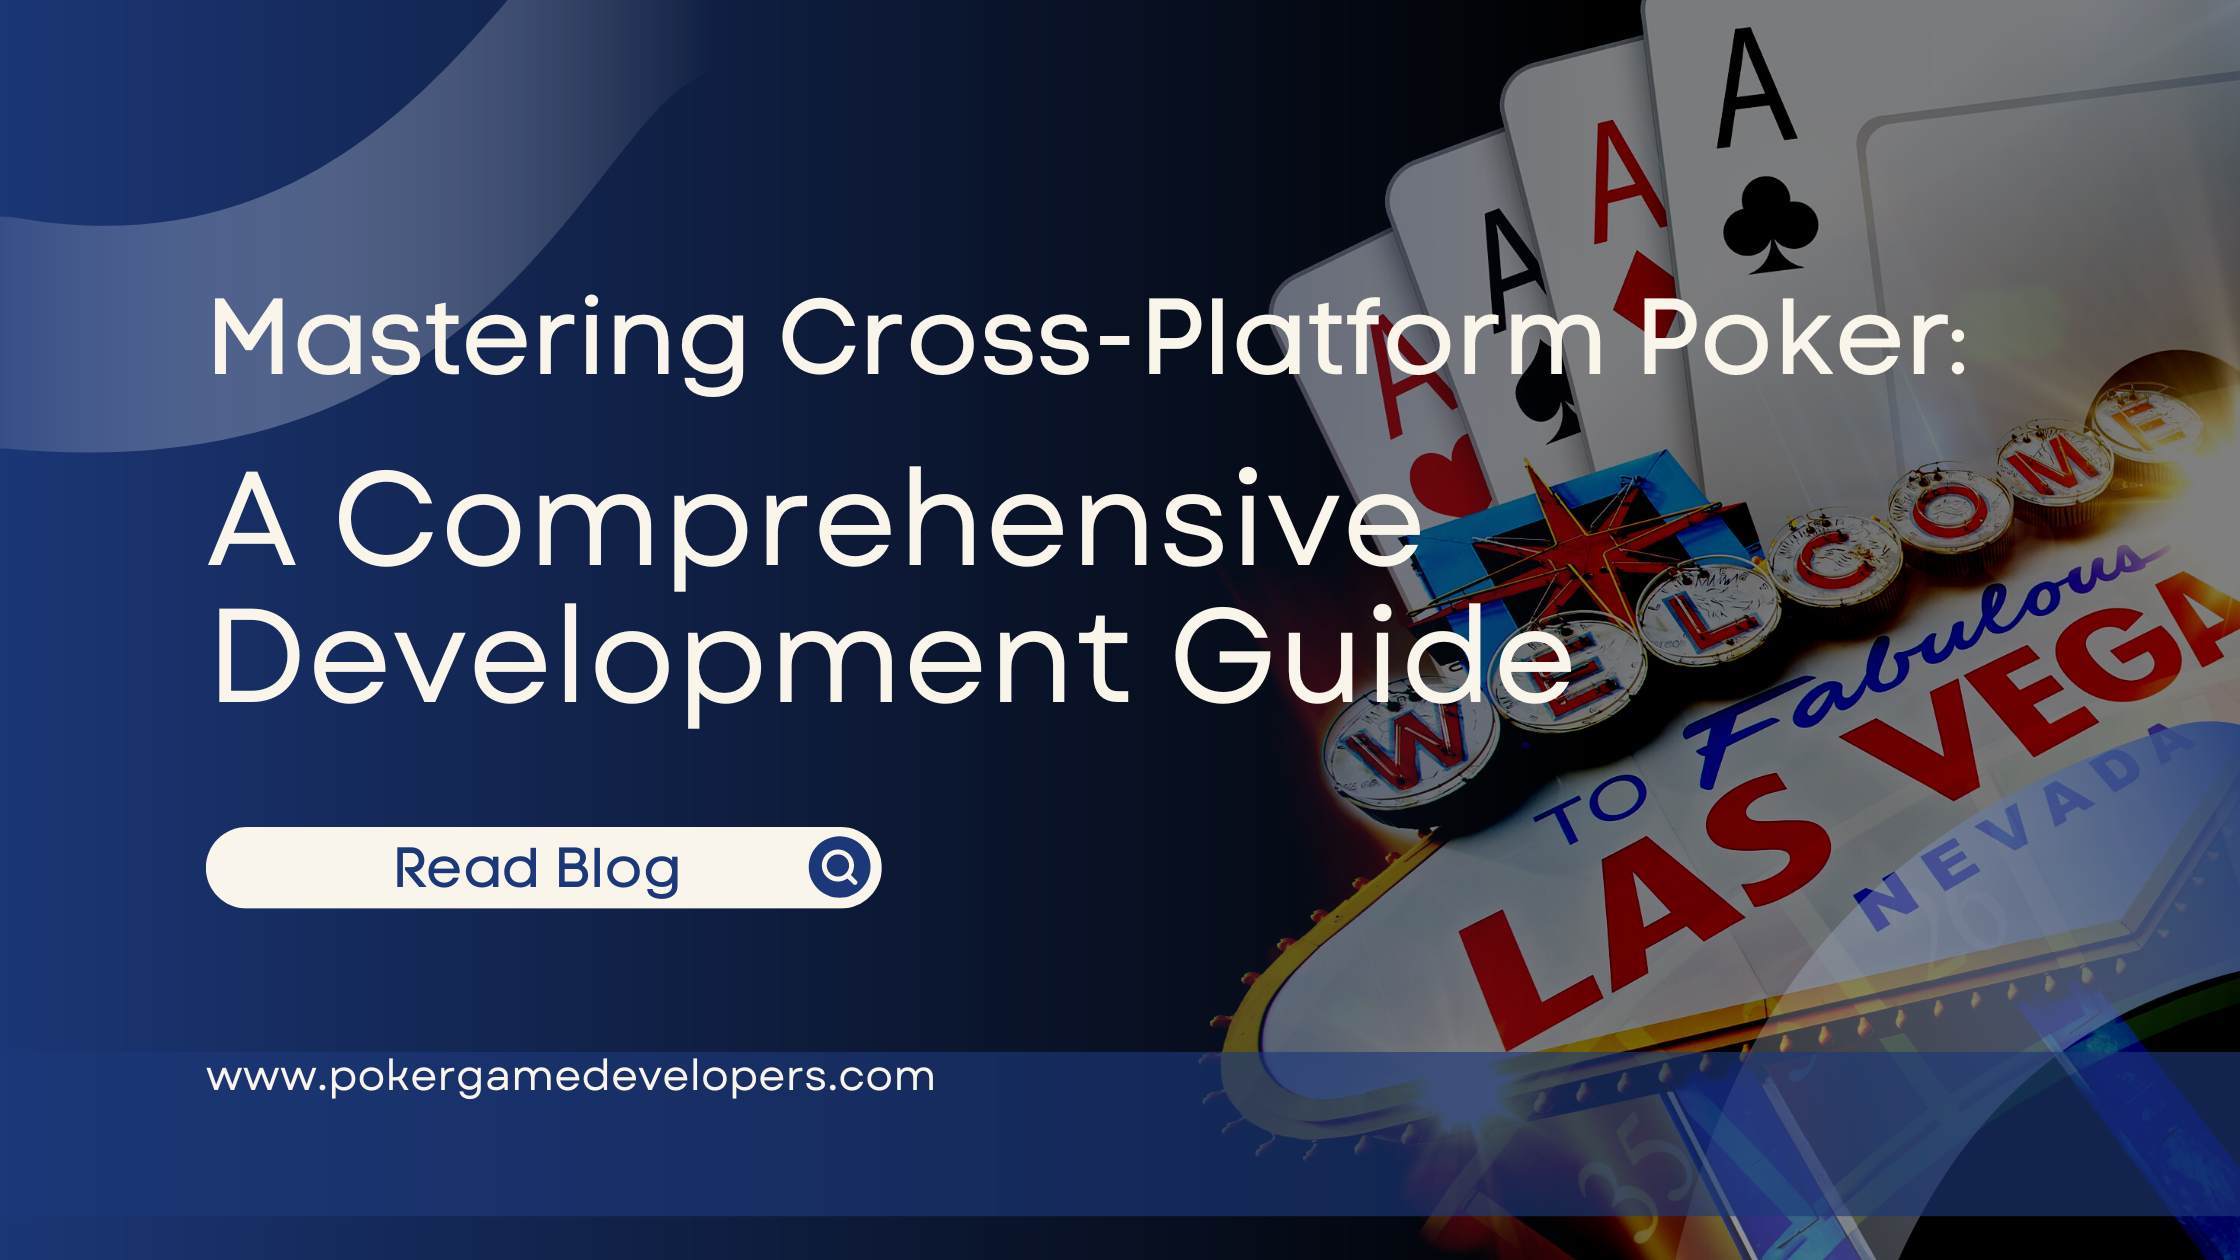 Cross platform poker game development